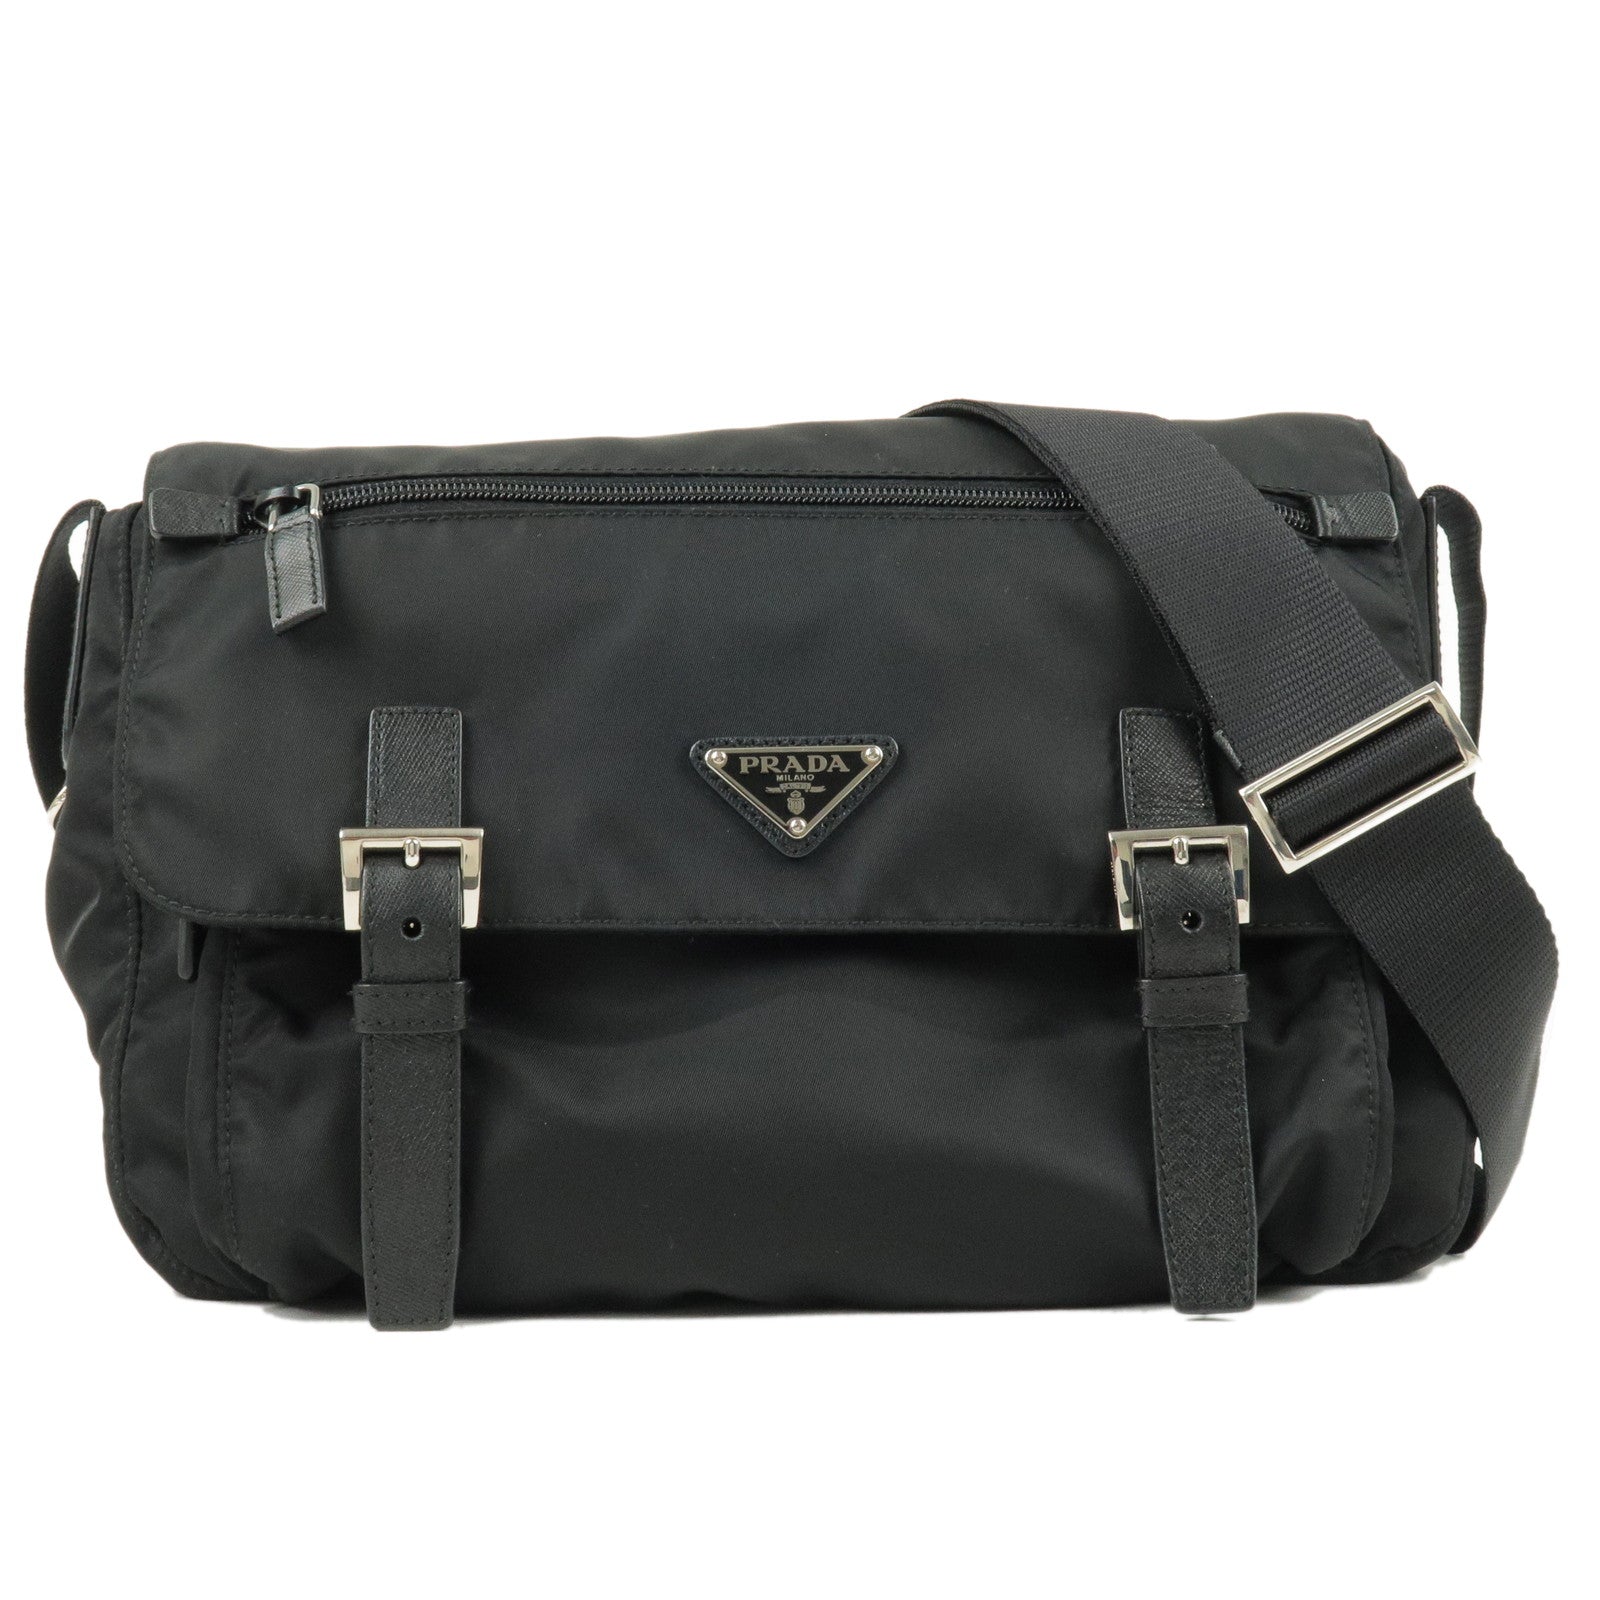 PRADA-Logo-Nylon-Leather-Shoulder-Bag-NERO-Black-BT6671